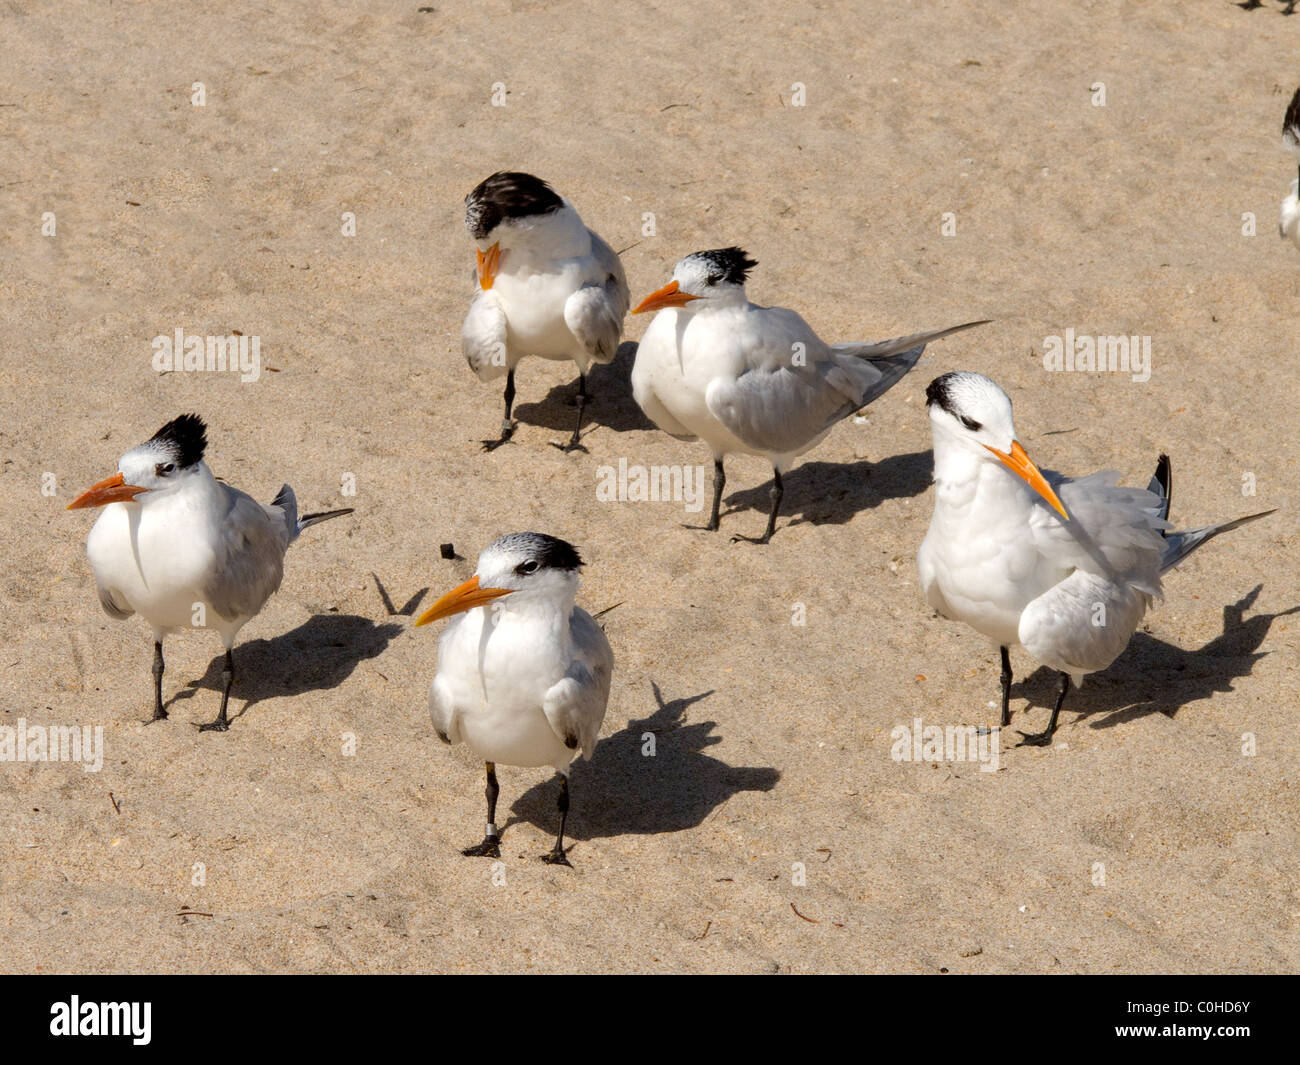 Royal Terns on sand. Stock Photo